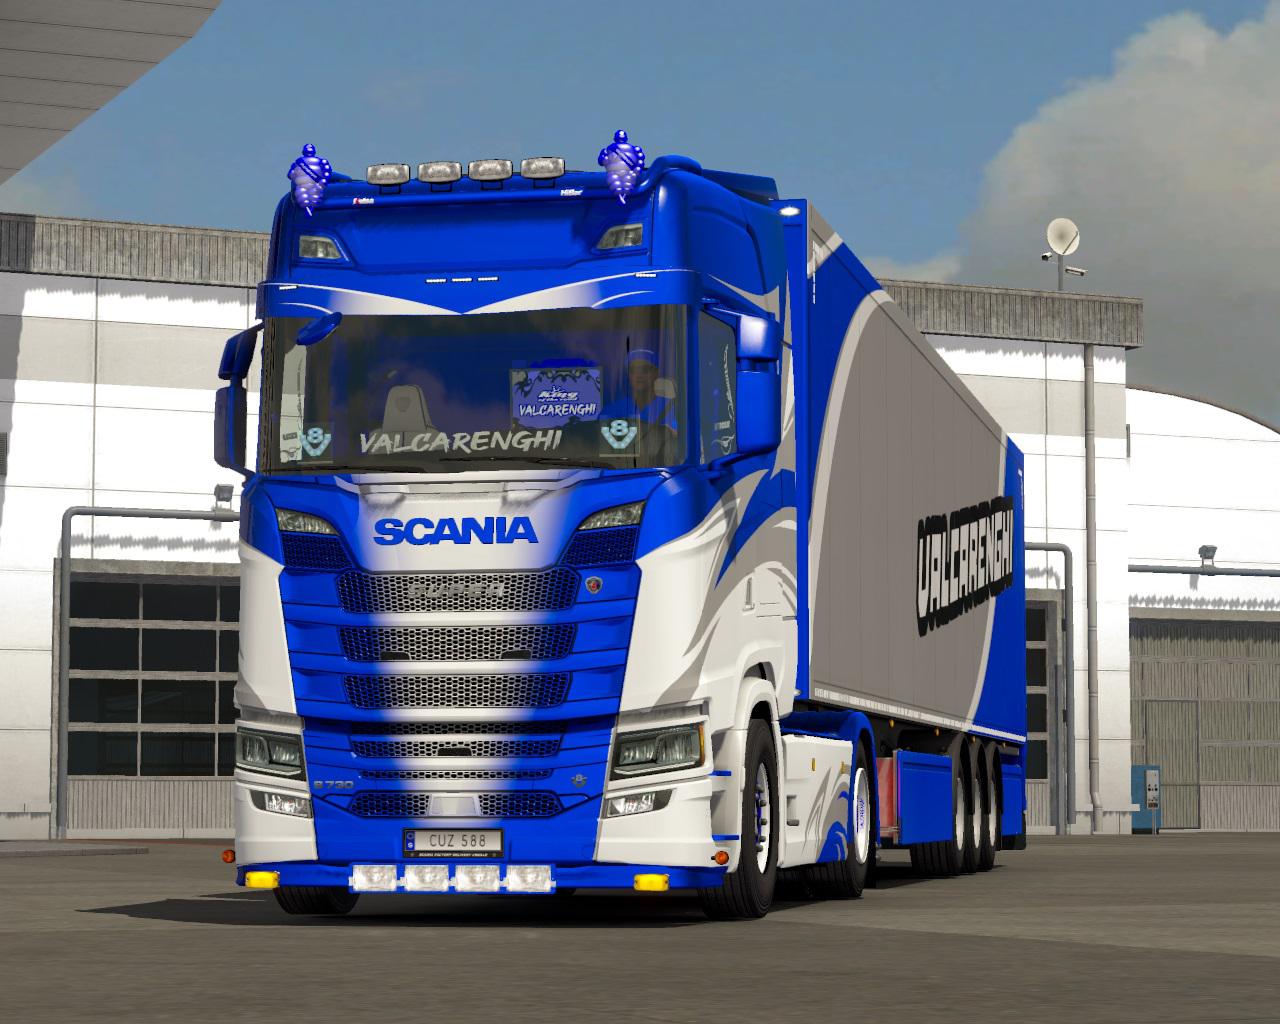 Ets2 Scania S Valcarenghi Skin V1 0 1 36 X Euro Truck Simulator 2 Hot Sex Picture